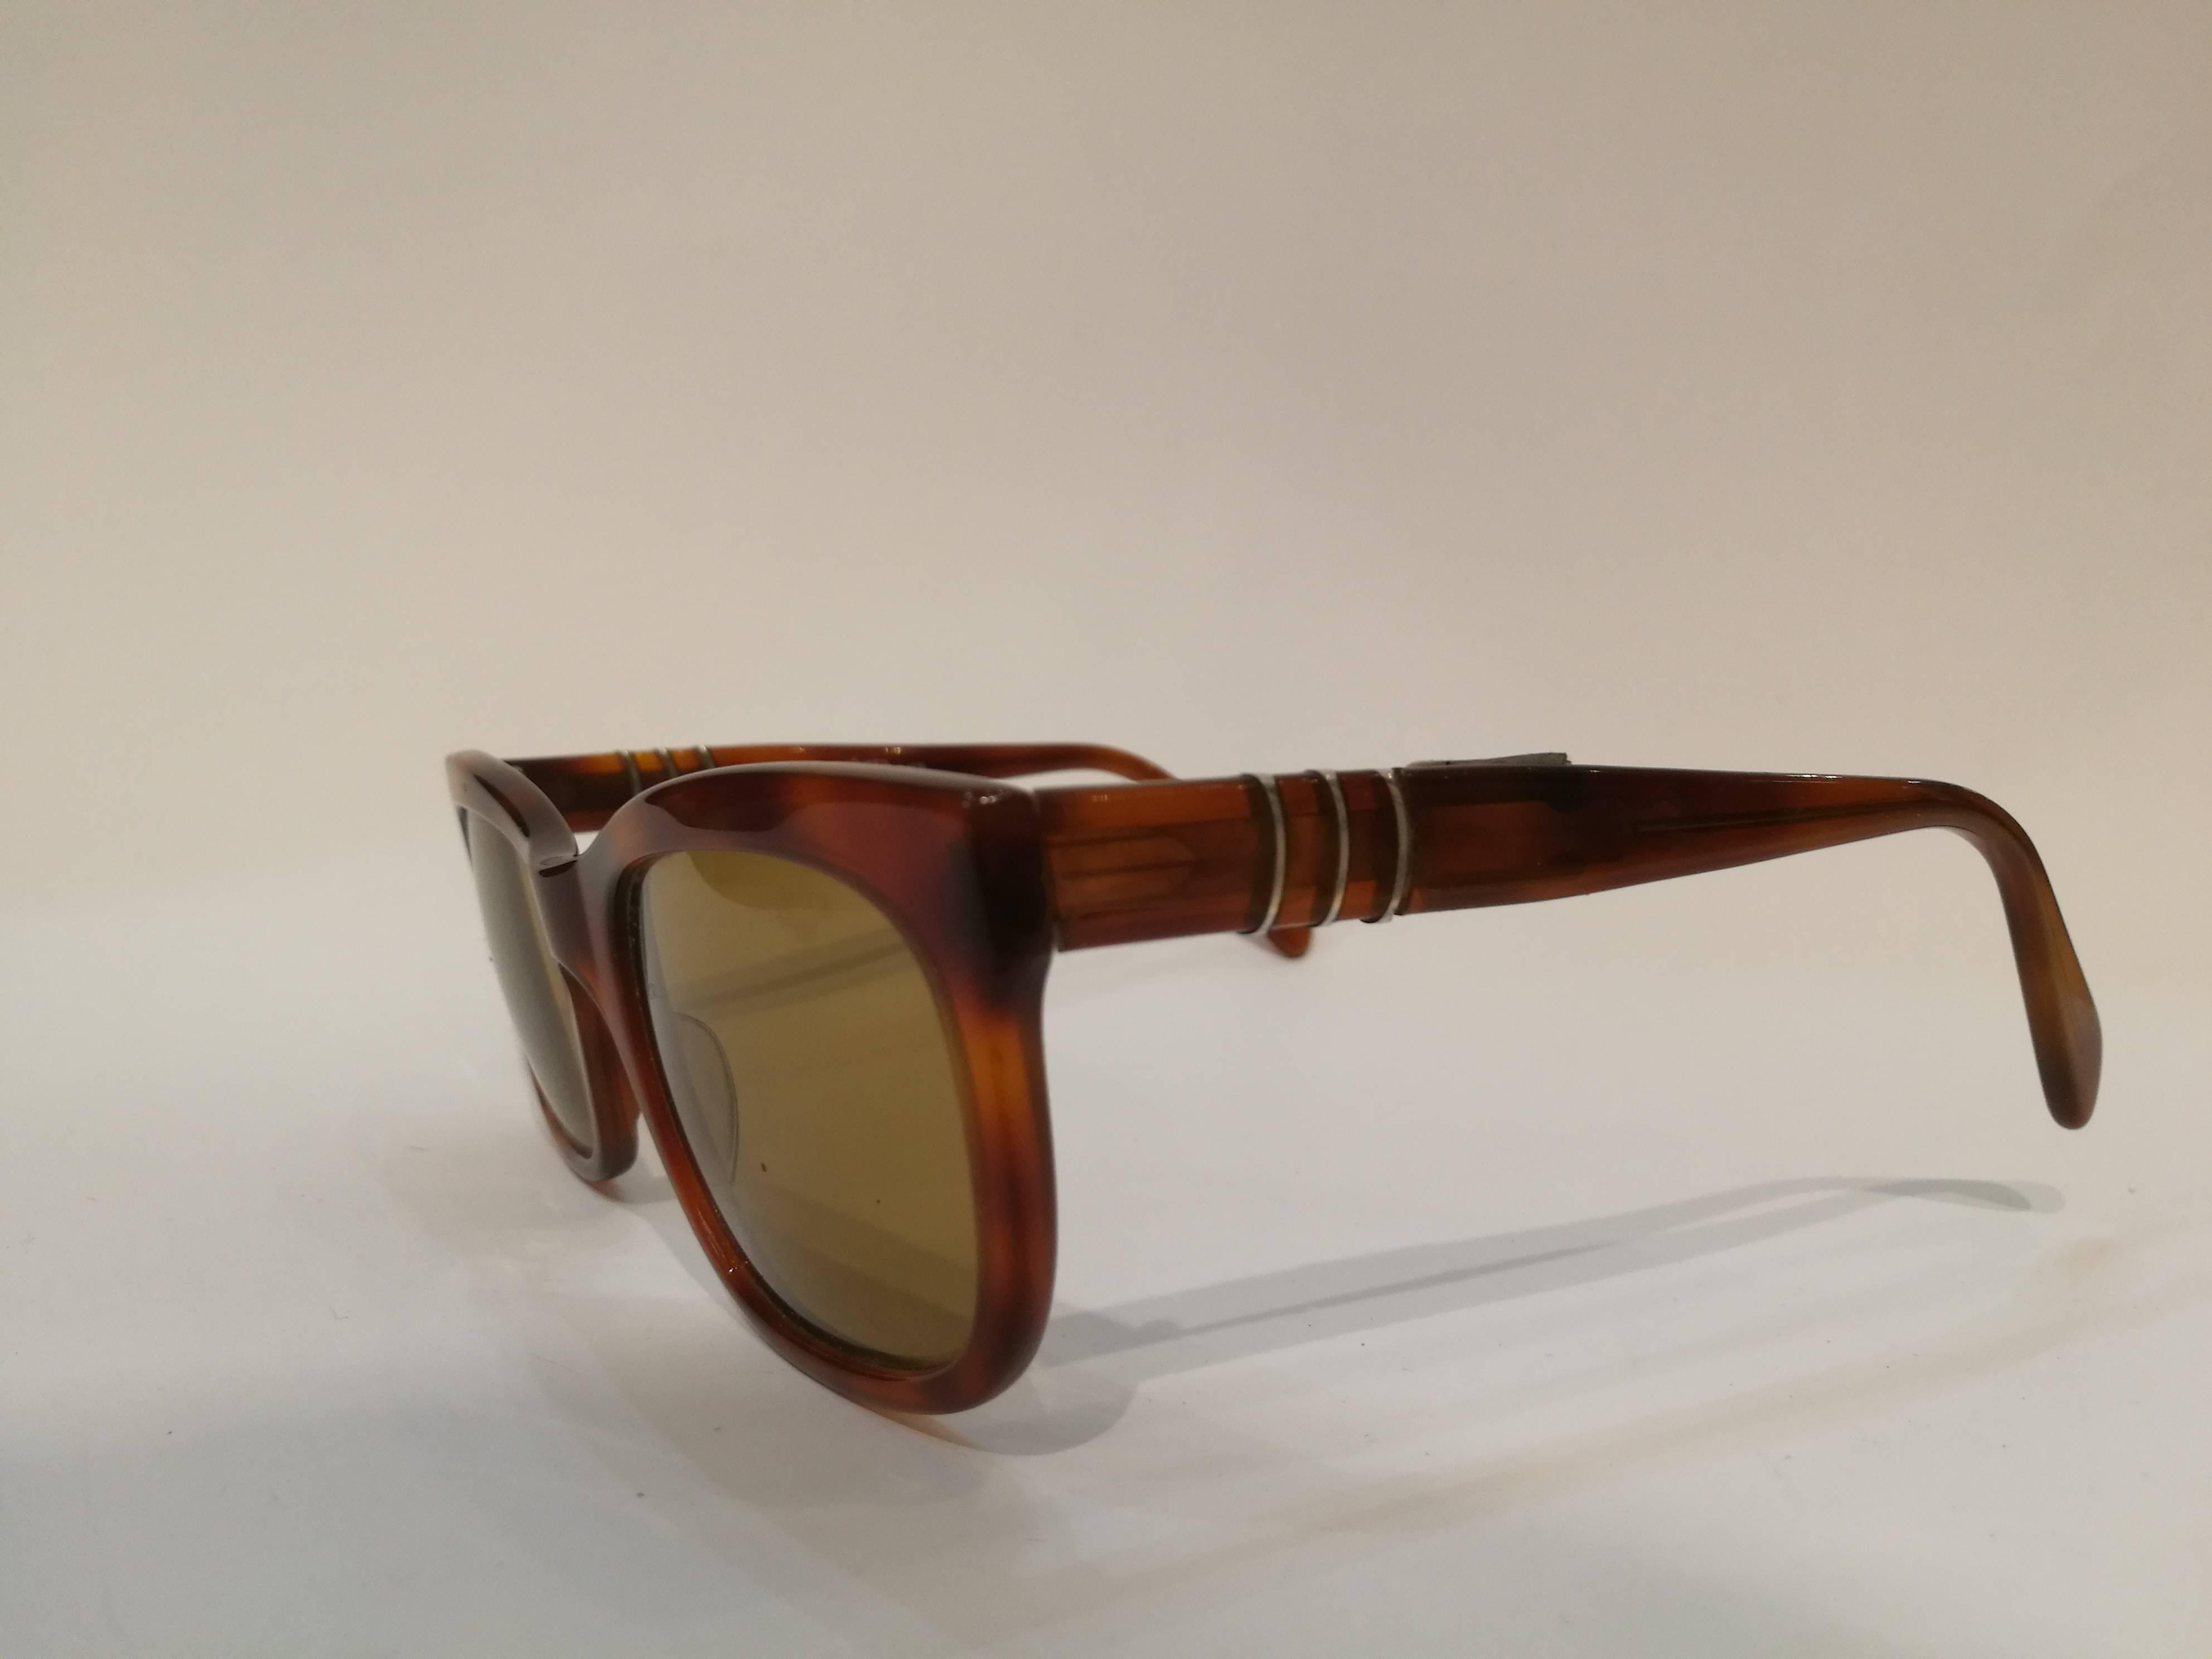 1980s Persol for Ratti vintage sunglasses
Unworn
Brown tone